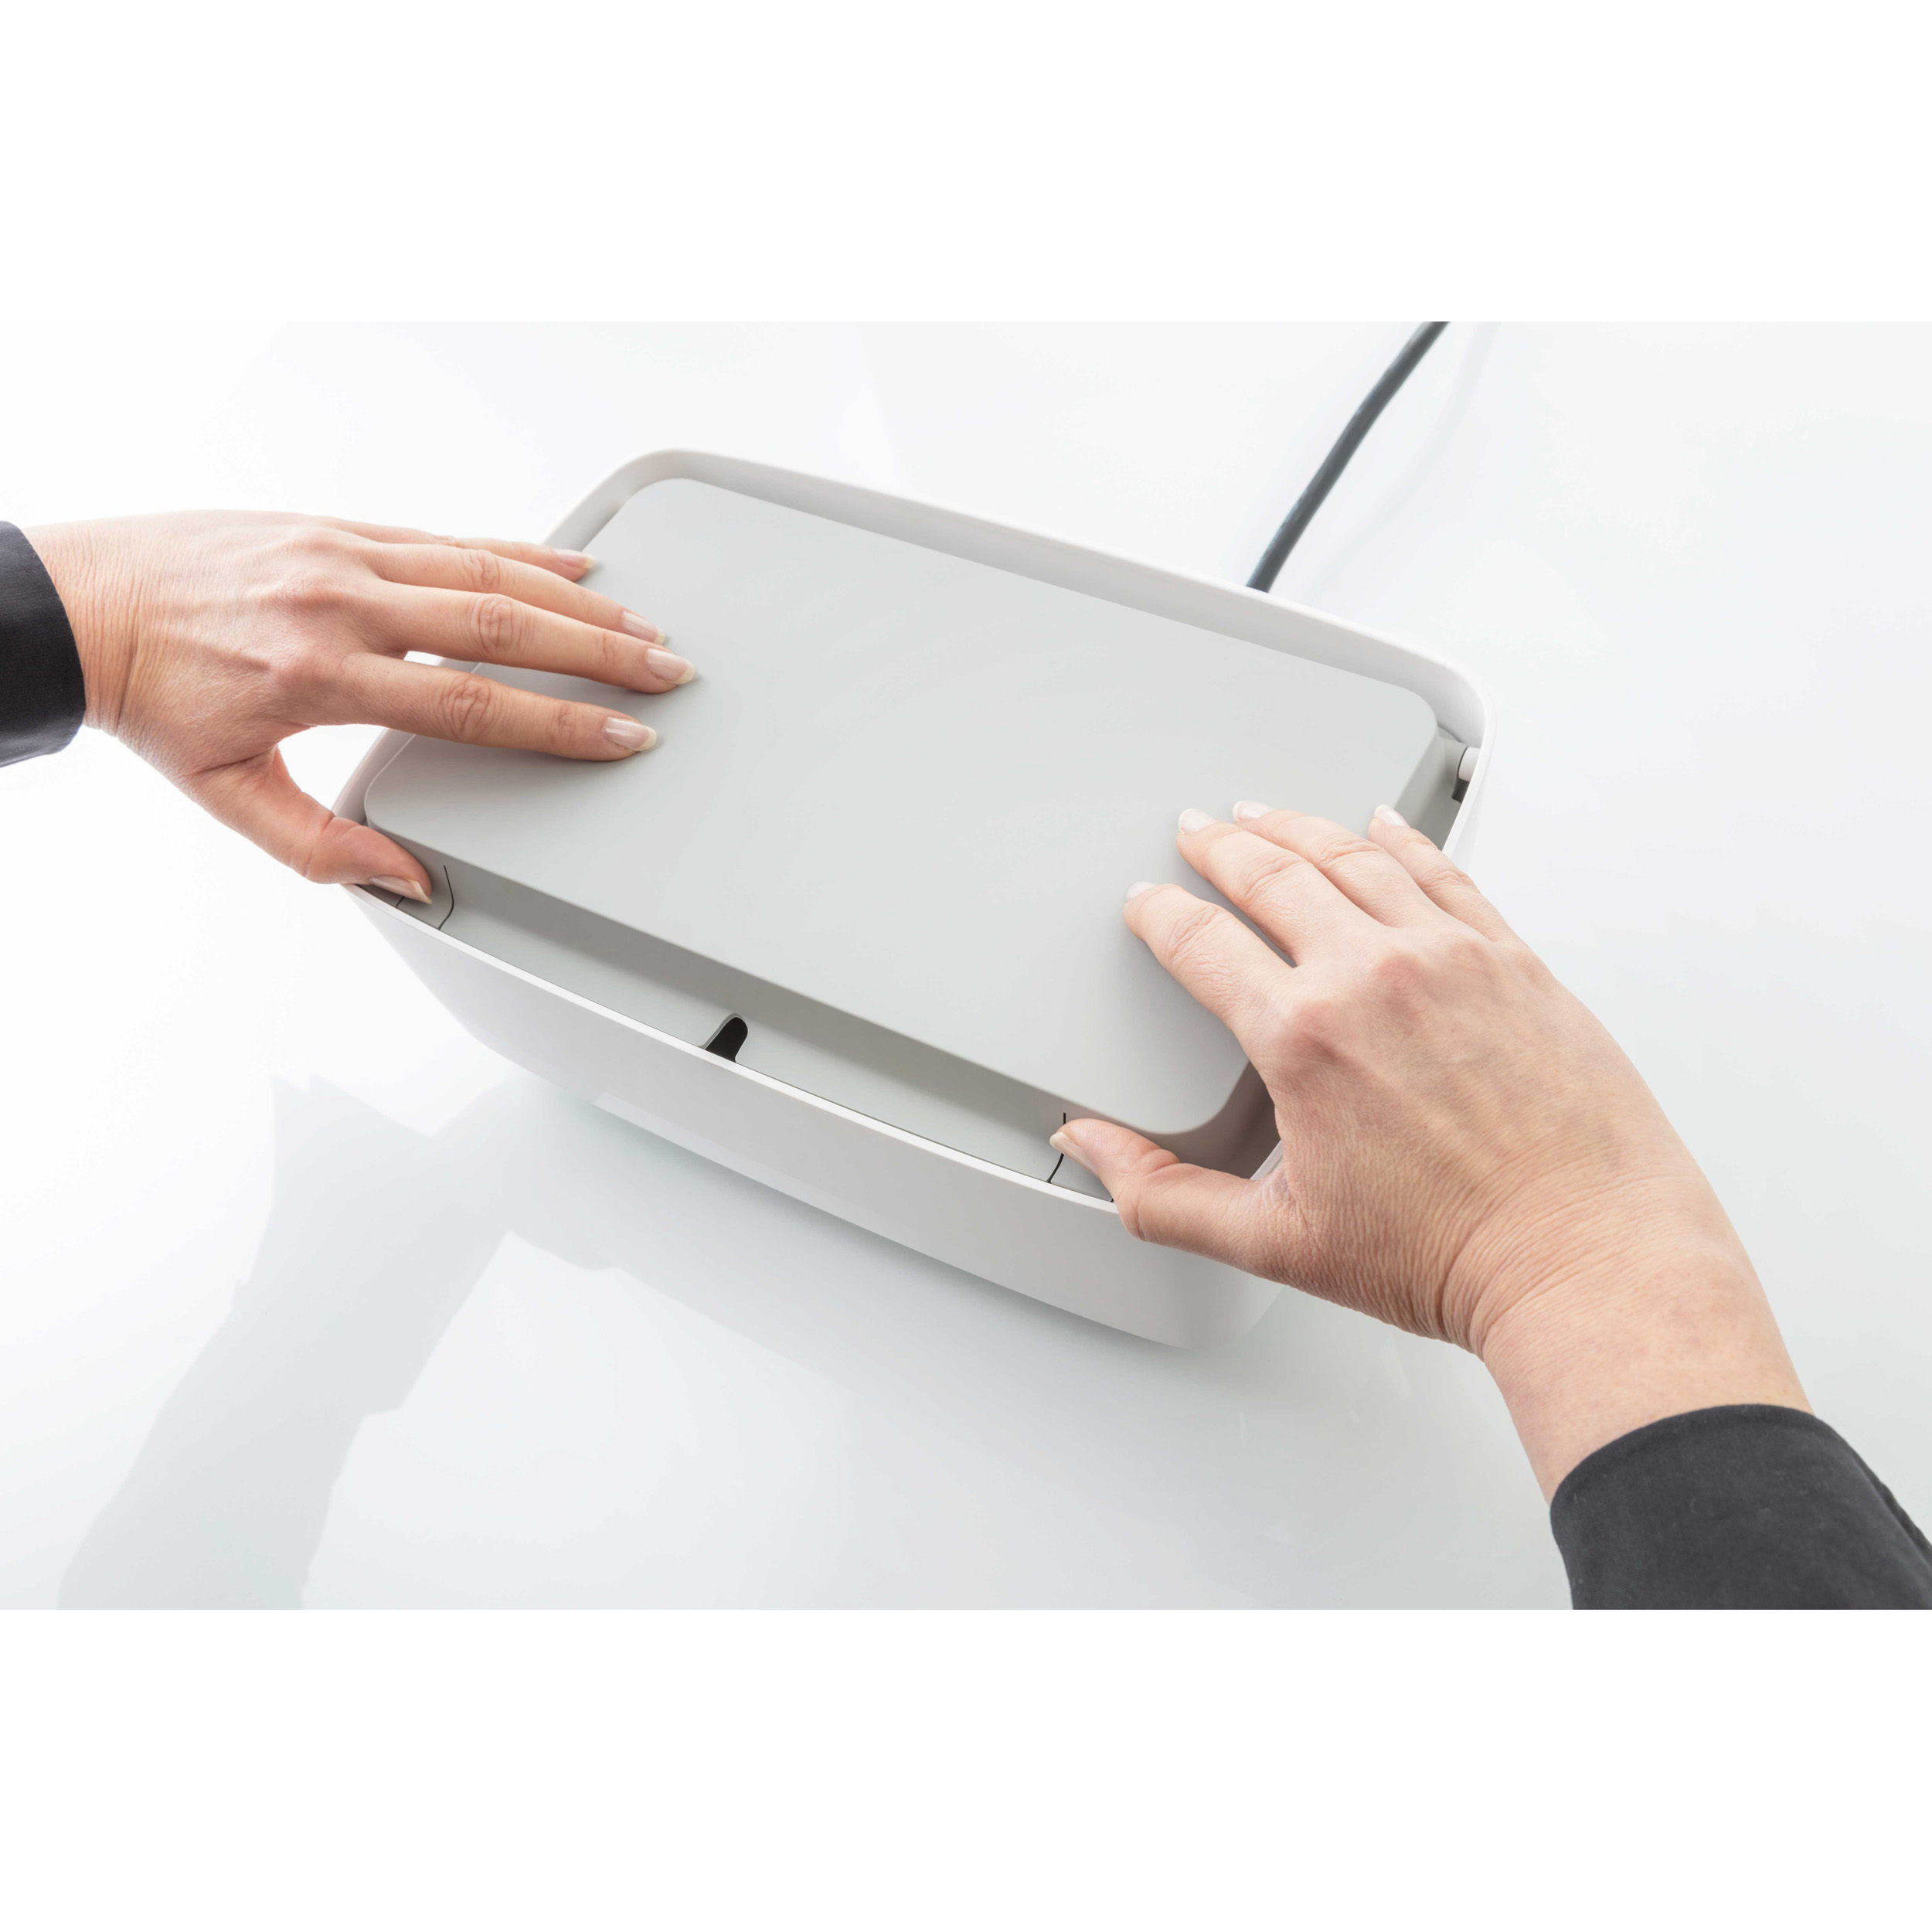 Charging White Charging Box iPad, iPhone Box für KMP